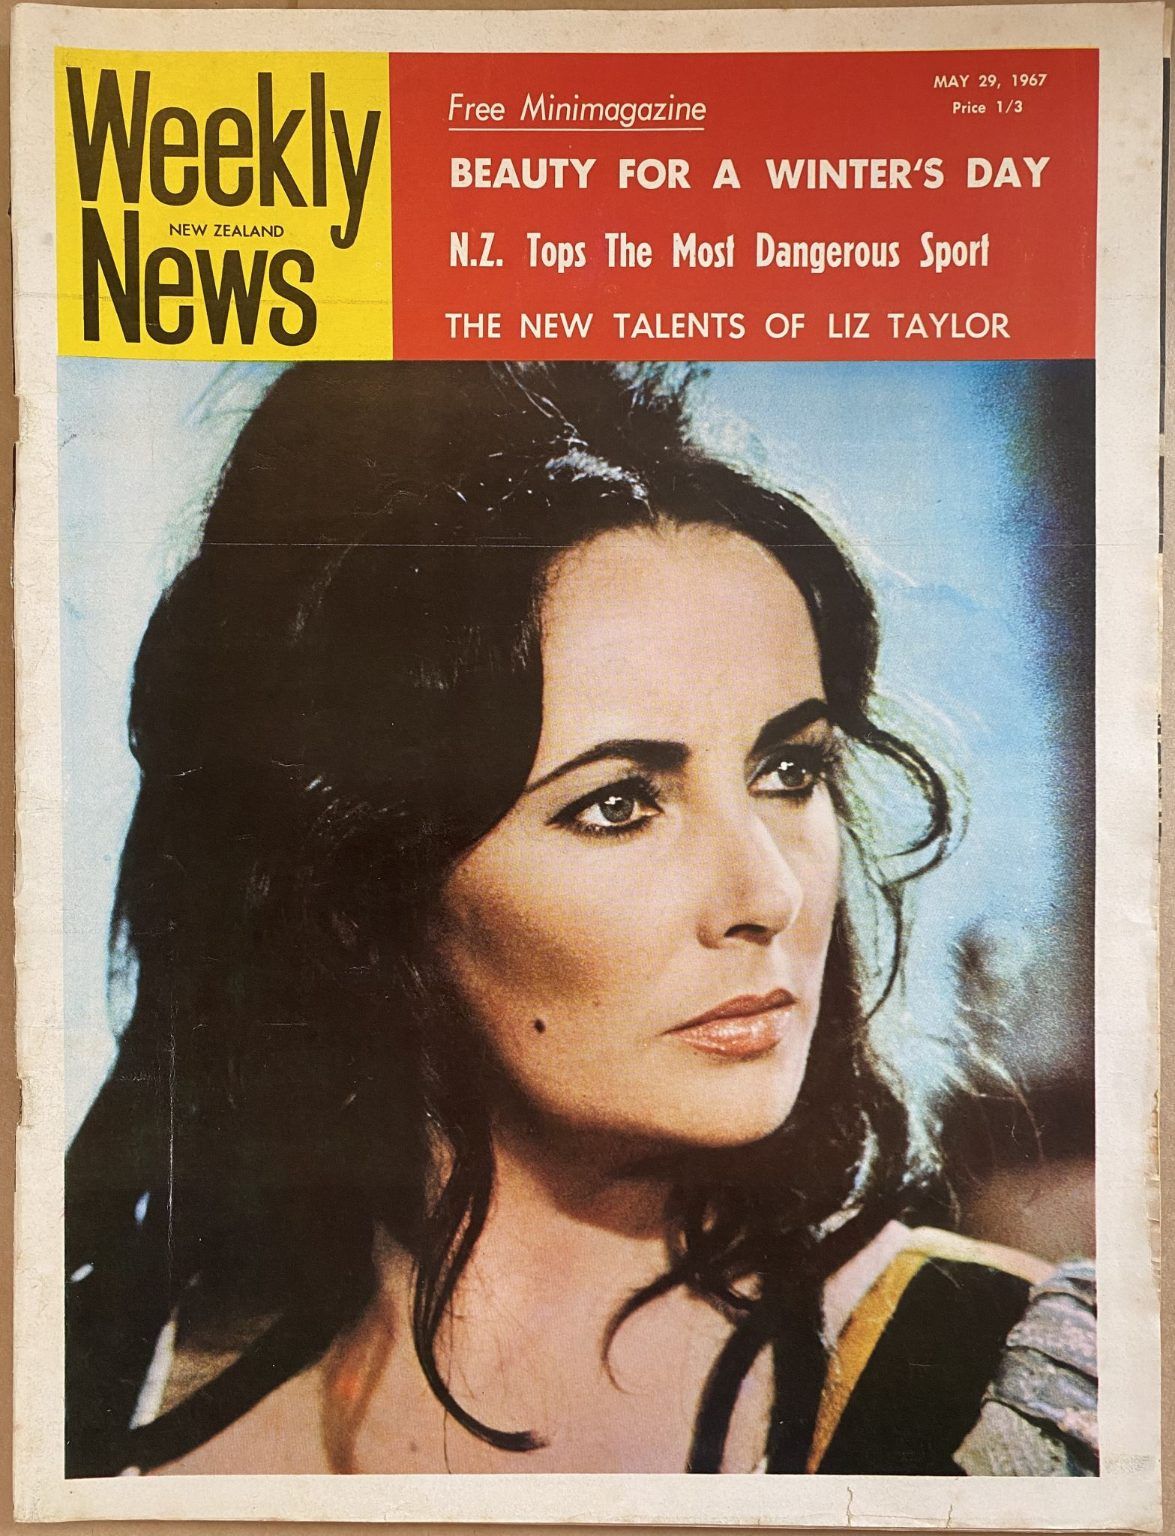 OLD NEWSPAPER: New Zealand Weekly News, No. 5400, 29 May 1967